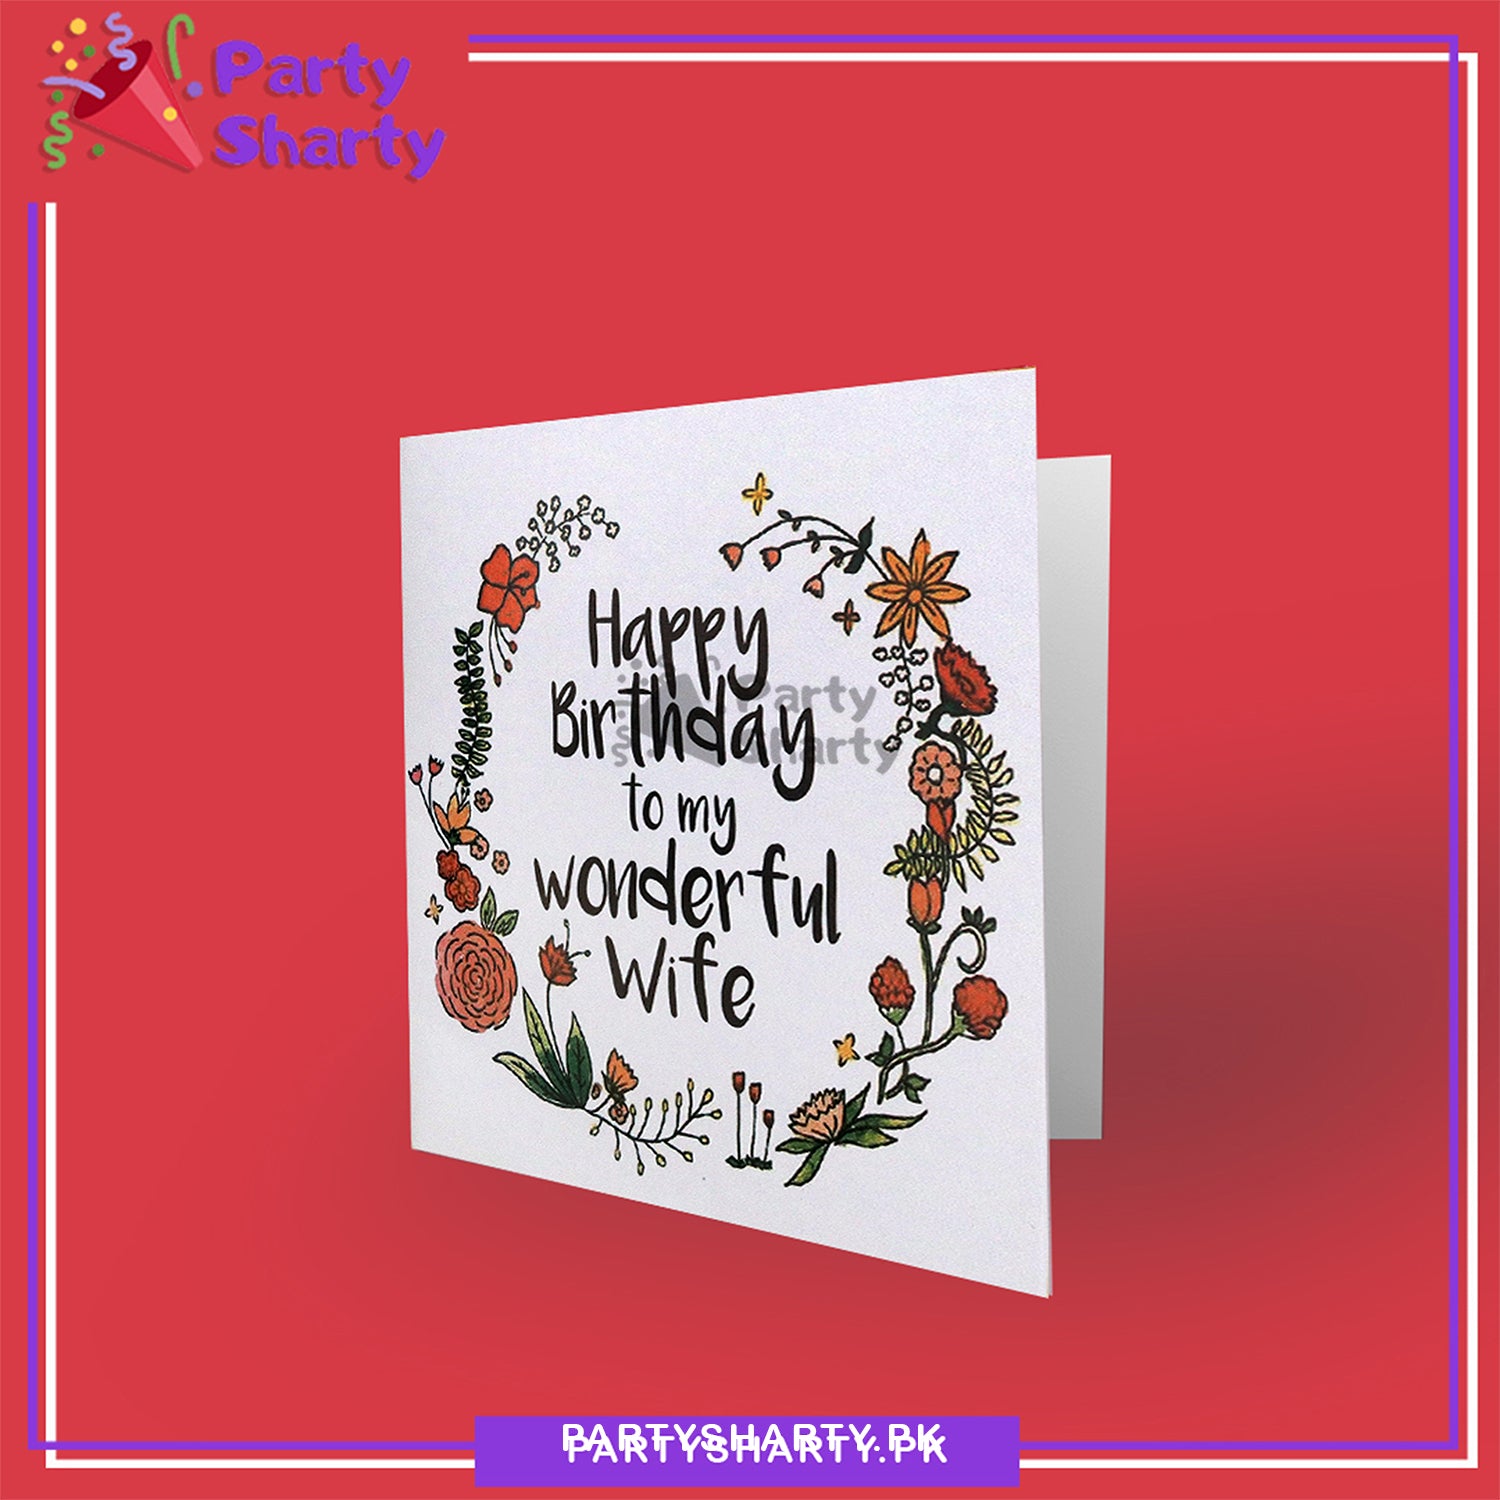 Happy Birthday to my Wonderful Wife Floral Design Greeting Card For Wife Birthday Celebration